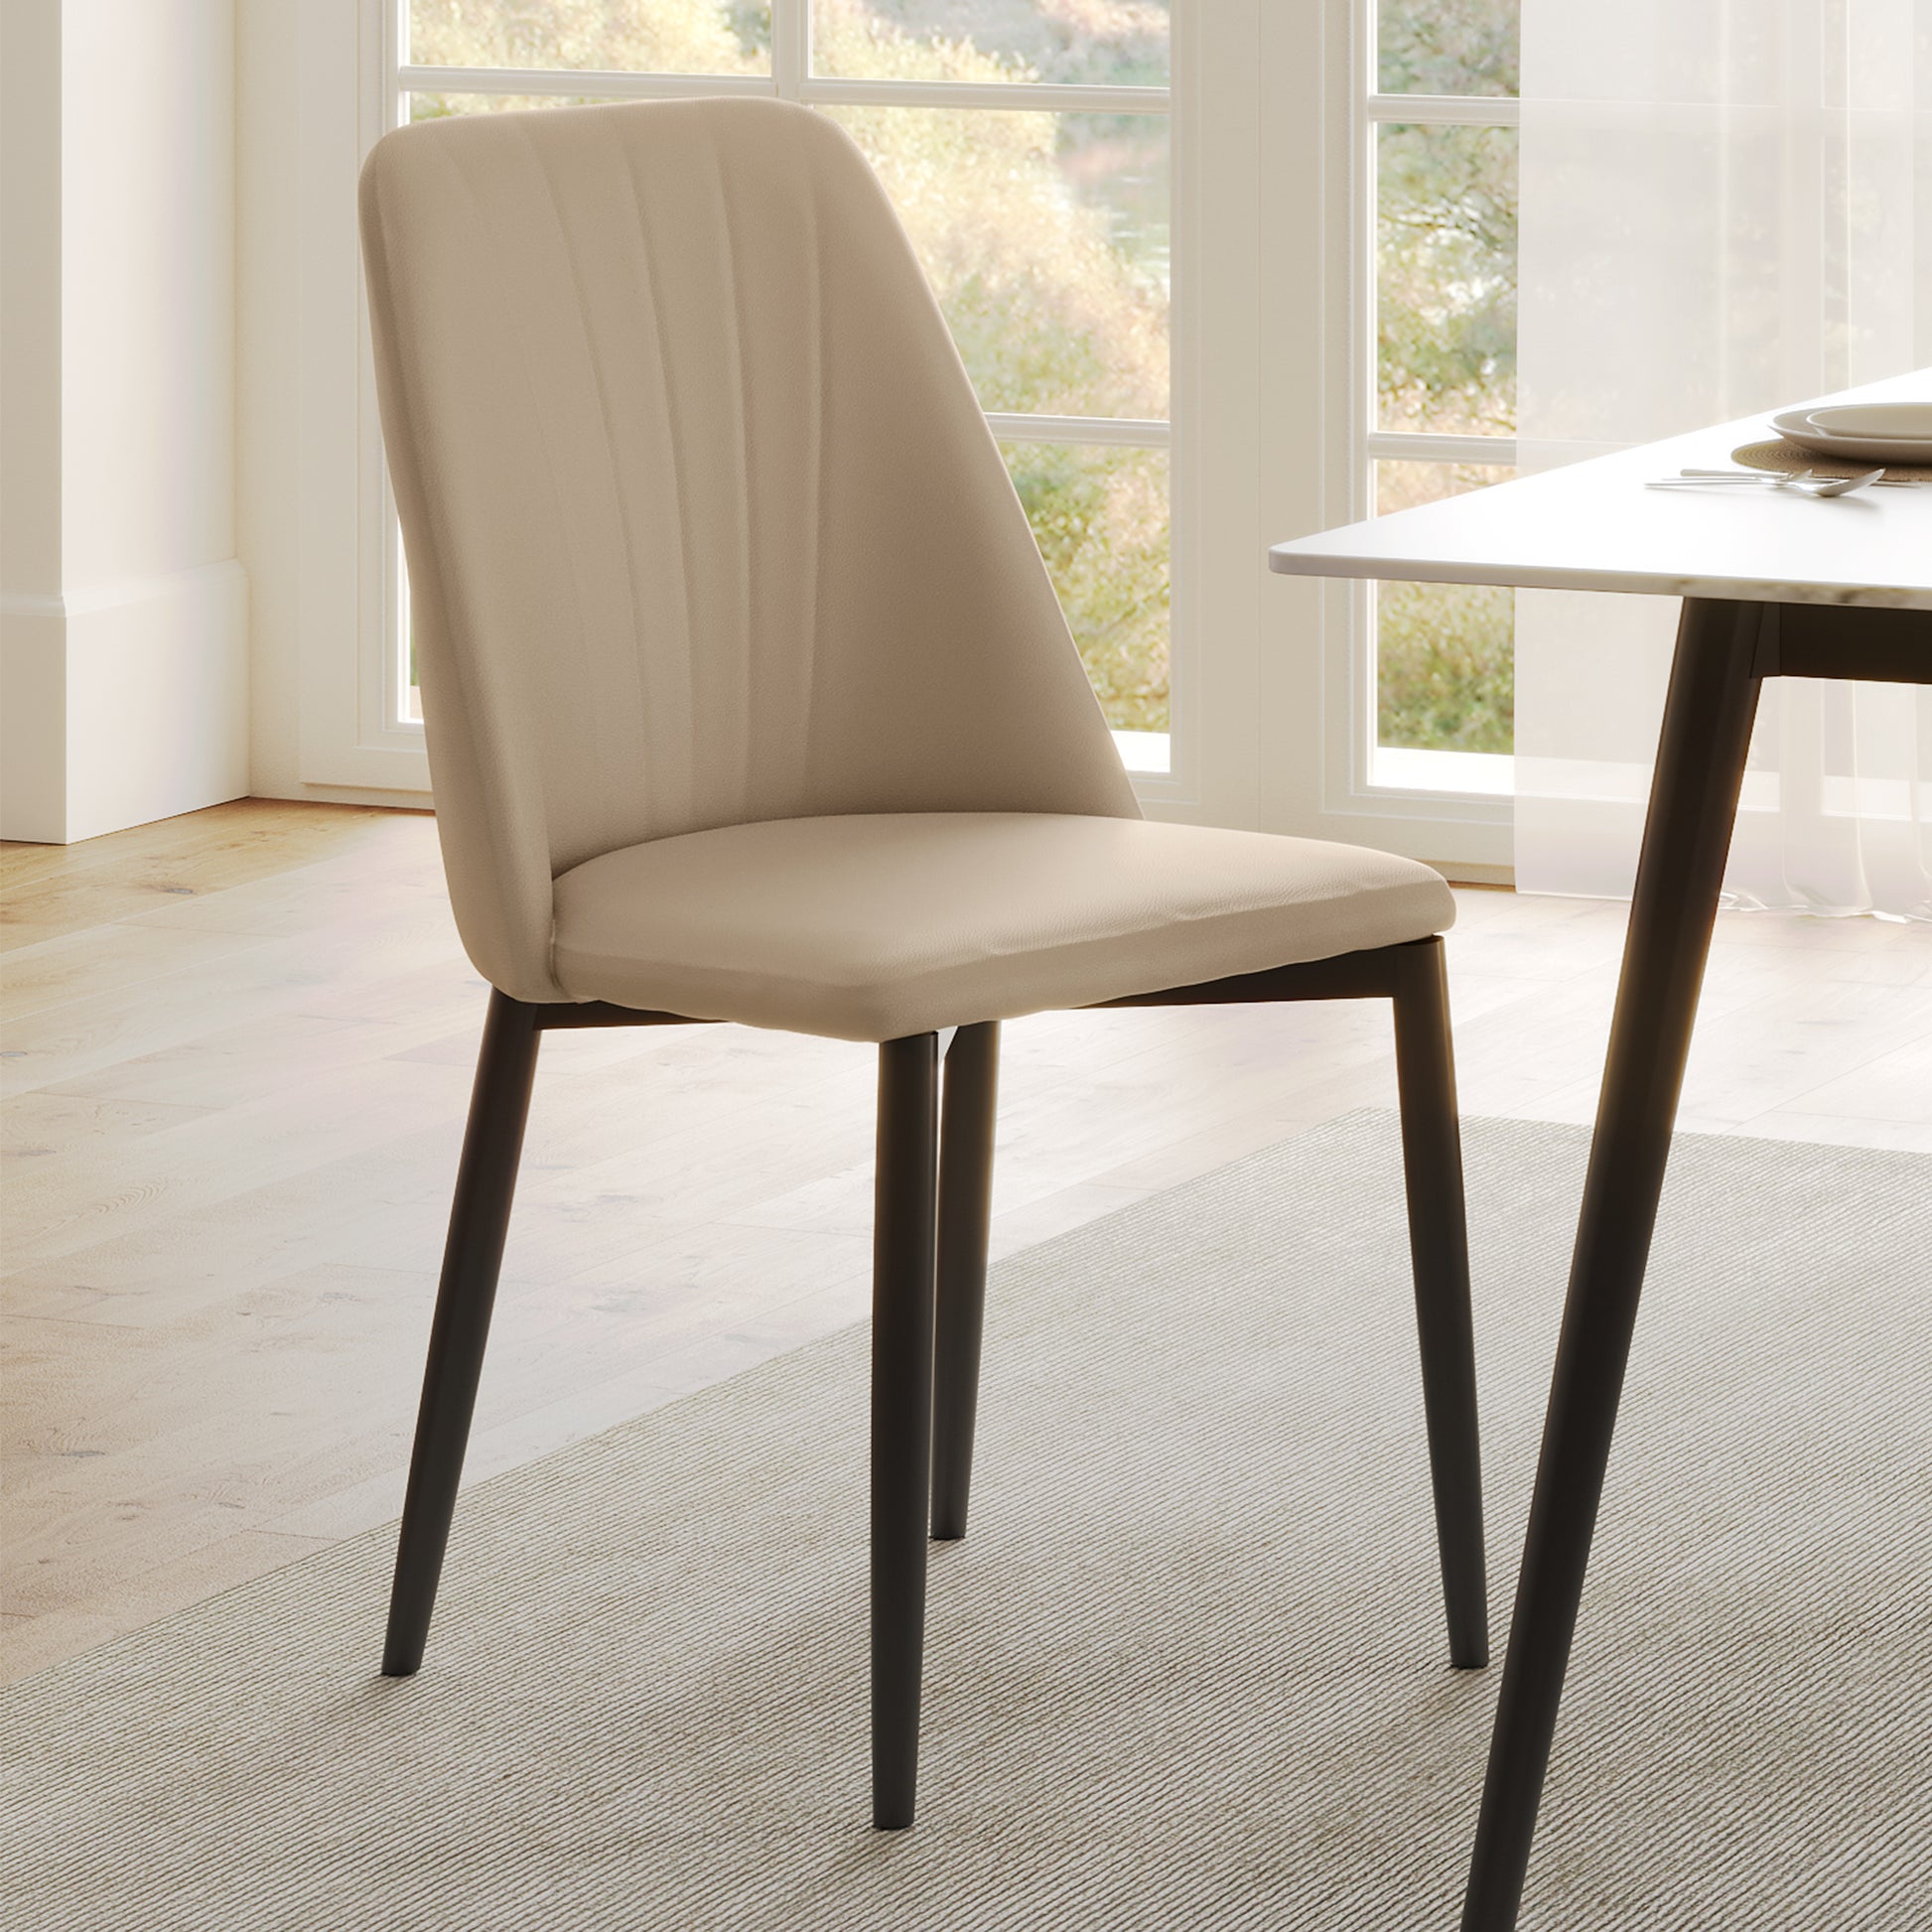 Eureka Ergonomic Classic Simple Dining Chairs Set of 2, Off-white